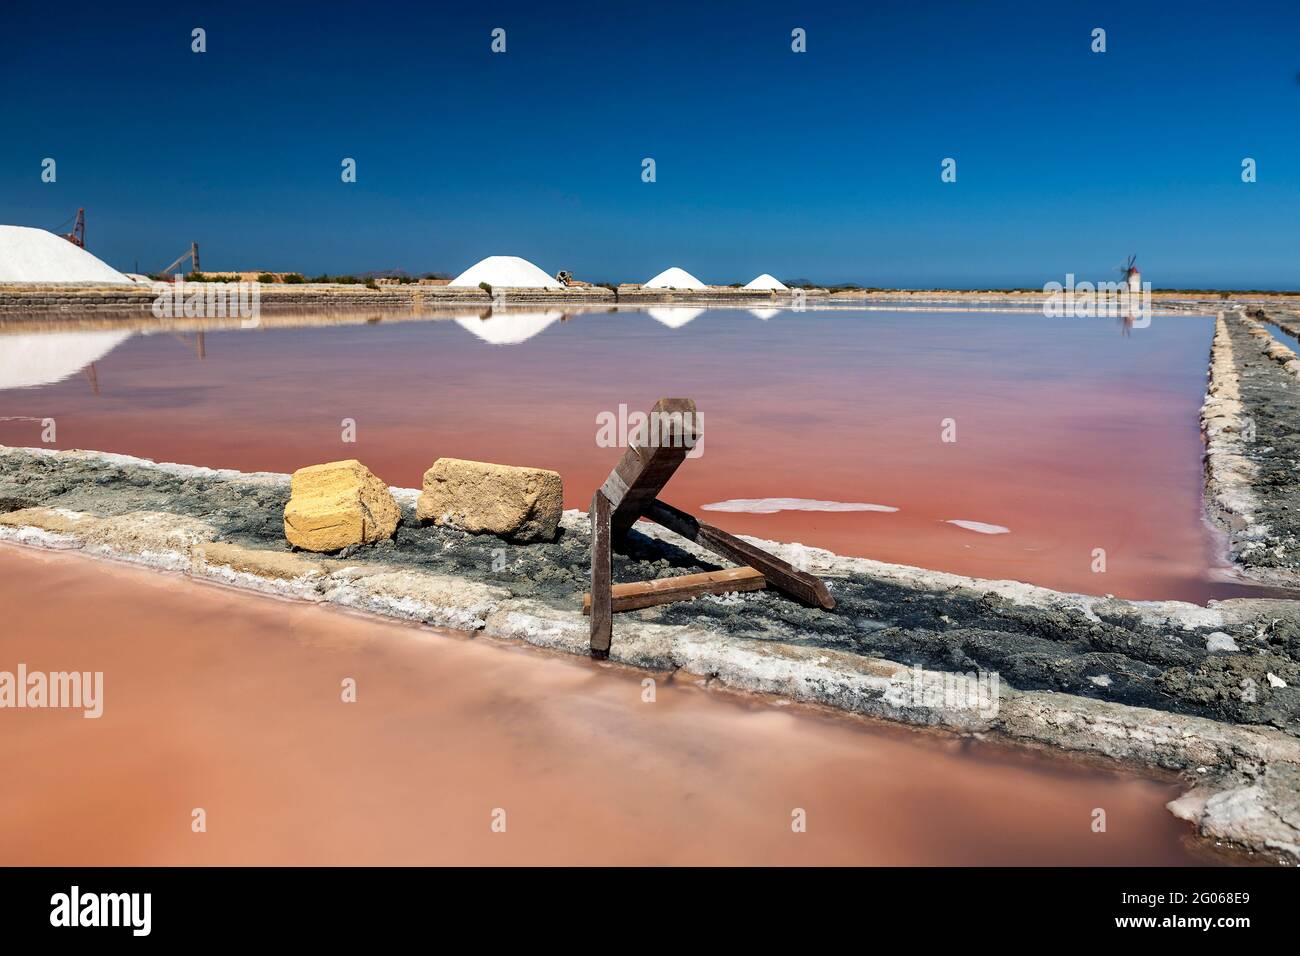 Saltworks, isola Grande island, Saline of Trapani, salt, piles of salt, nature reserve, Stagnone of Marsala, Sicily, Italy, Europe Stock Photo